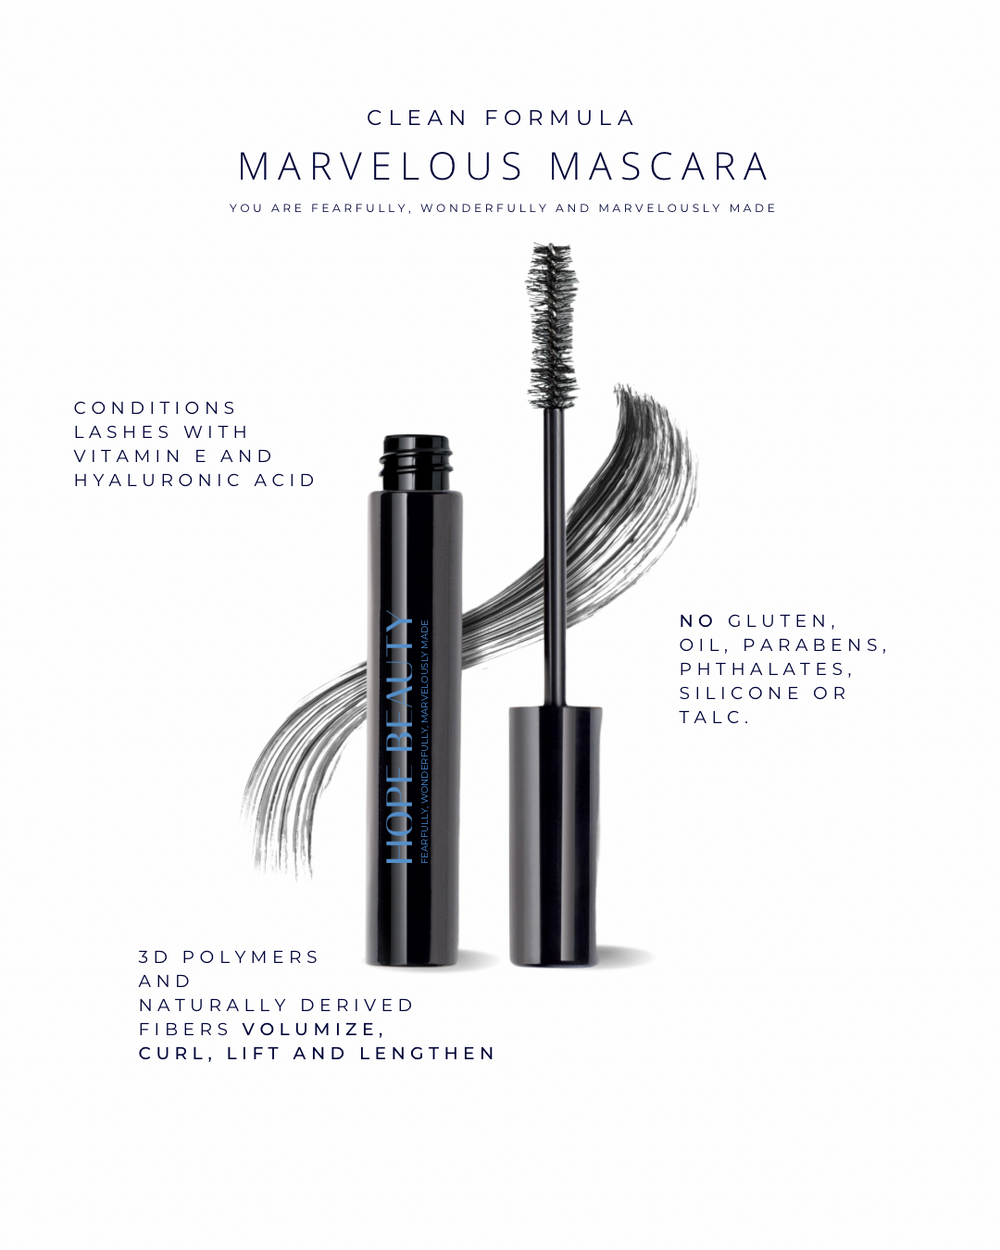 Marvelous Mascara